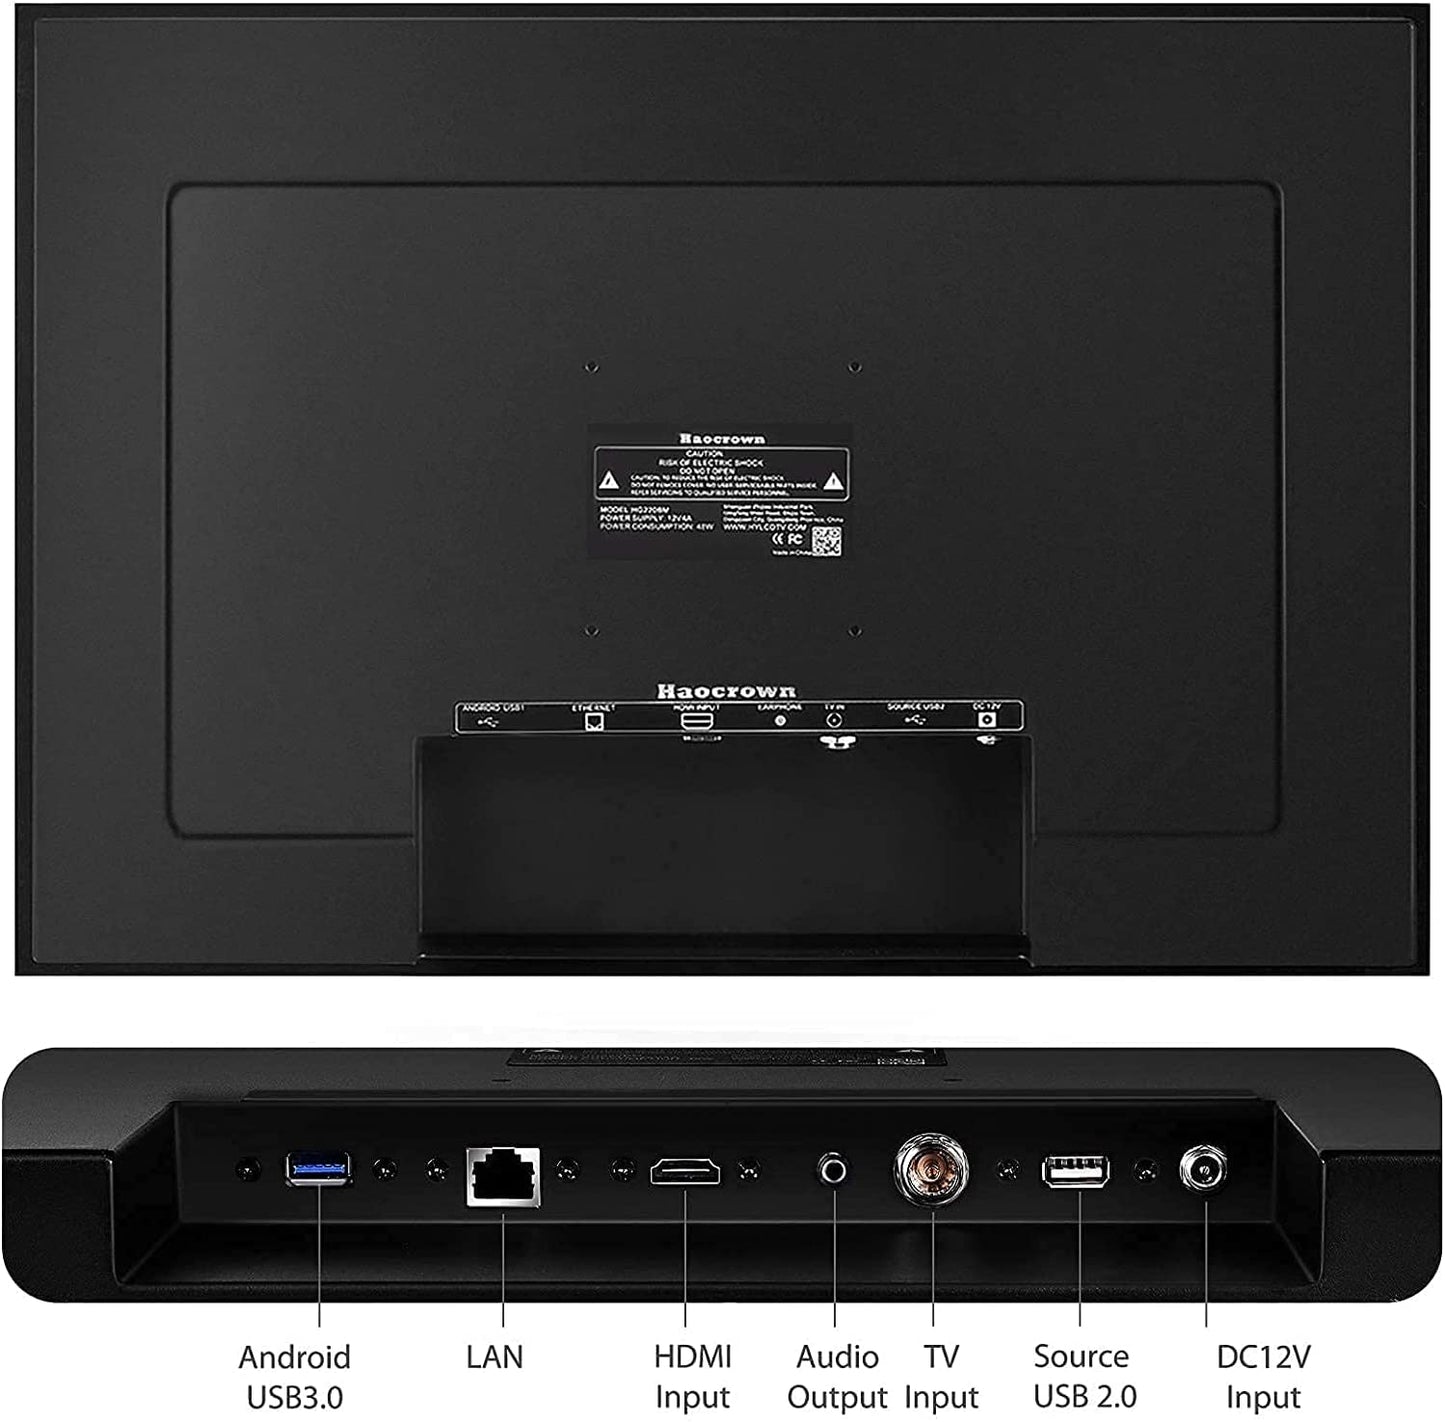 Espejo de baño TV de 27 pulgadas con pantalla táctil IP66 Impermeable Smart Android 11.0 Televisión Full HD 1080P Sintonizador ATSC incorporado Wi-Fi Bluetooth (Control táctil, Marco espejado)(LEHG270BM-M)